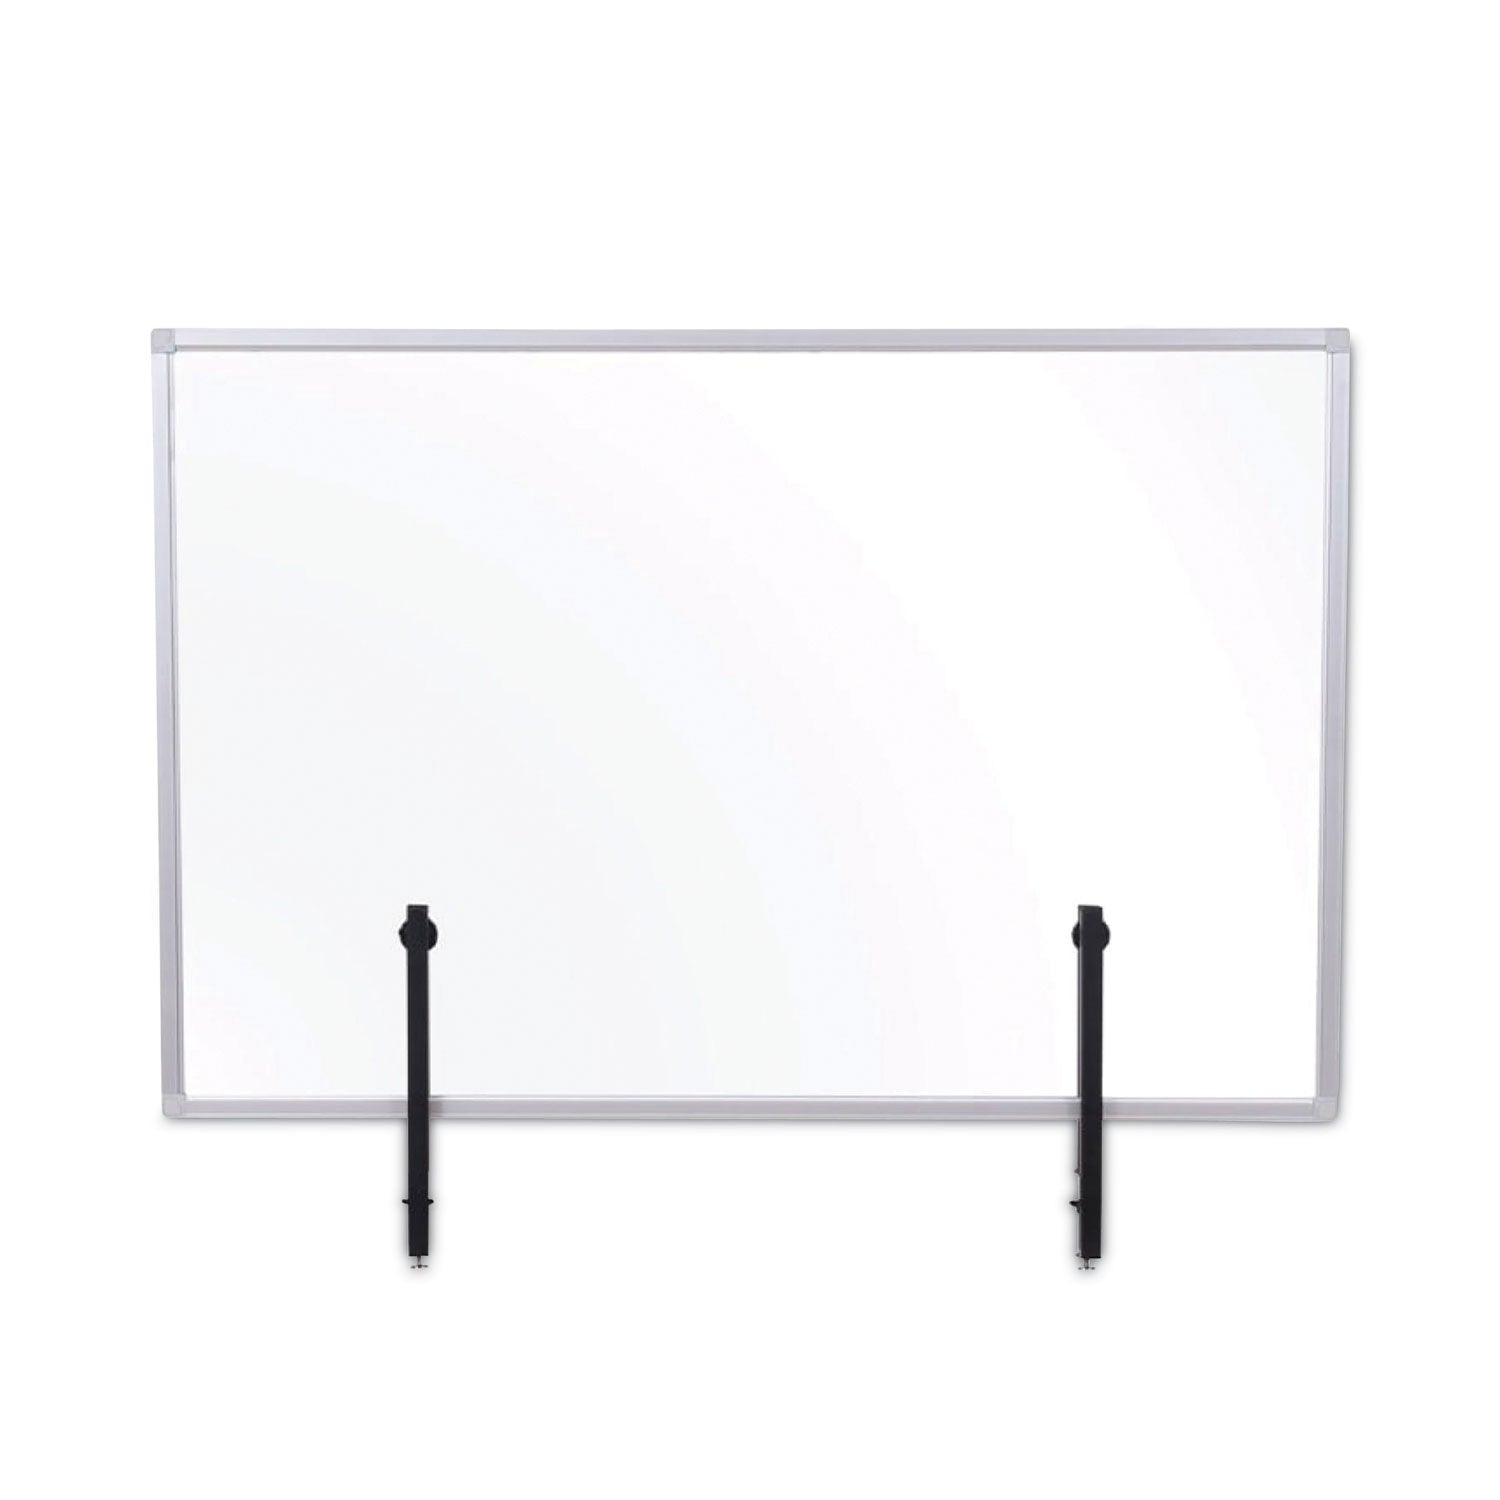 protector-series-glass-aluminum-desktop-divider-409-x-016-x-276-clear_bvcgl34019101 - 1